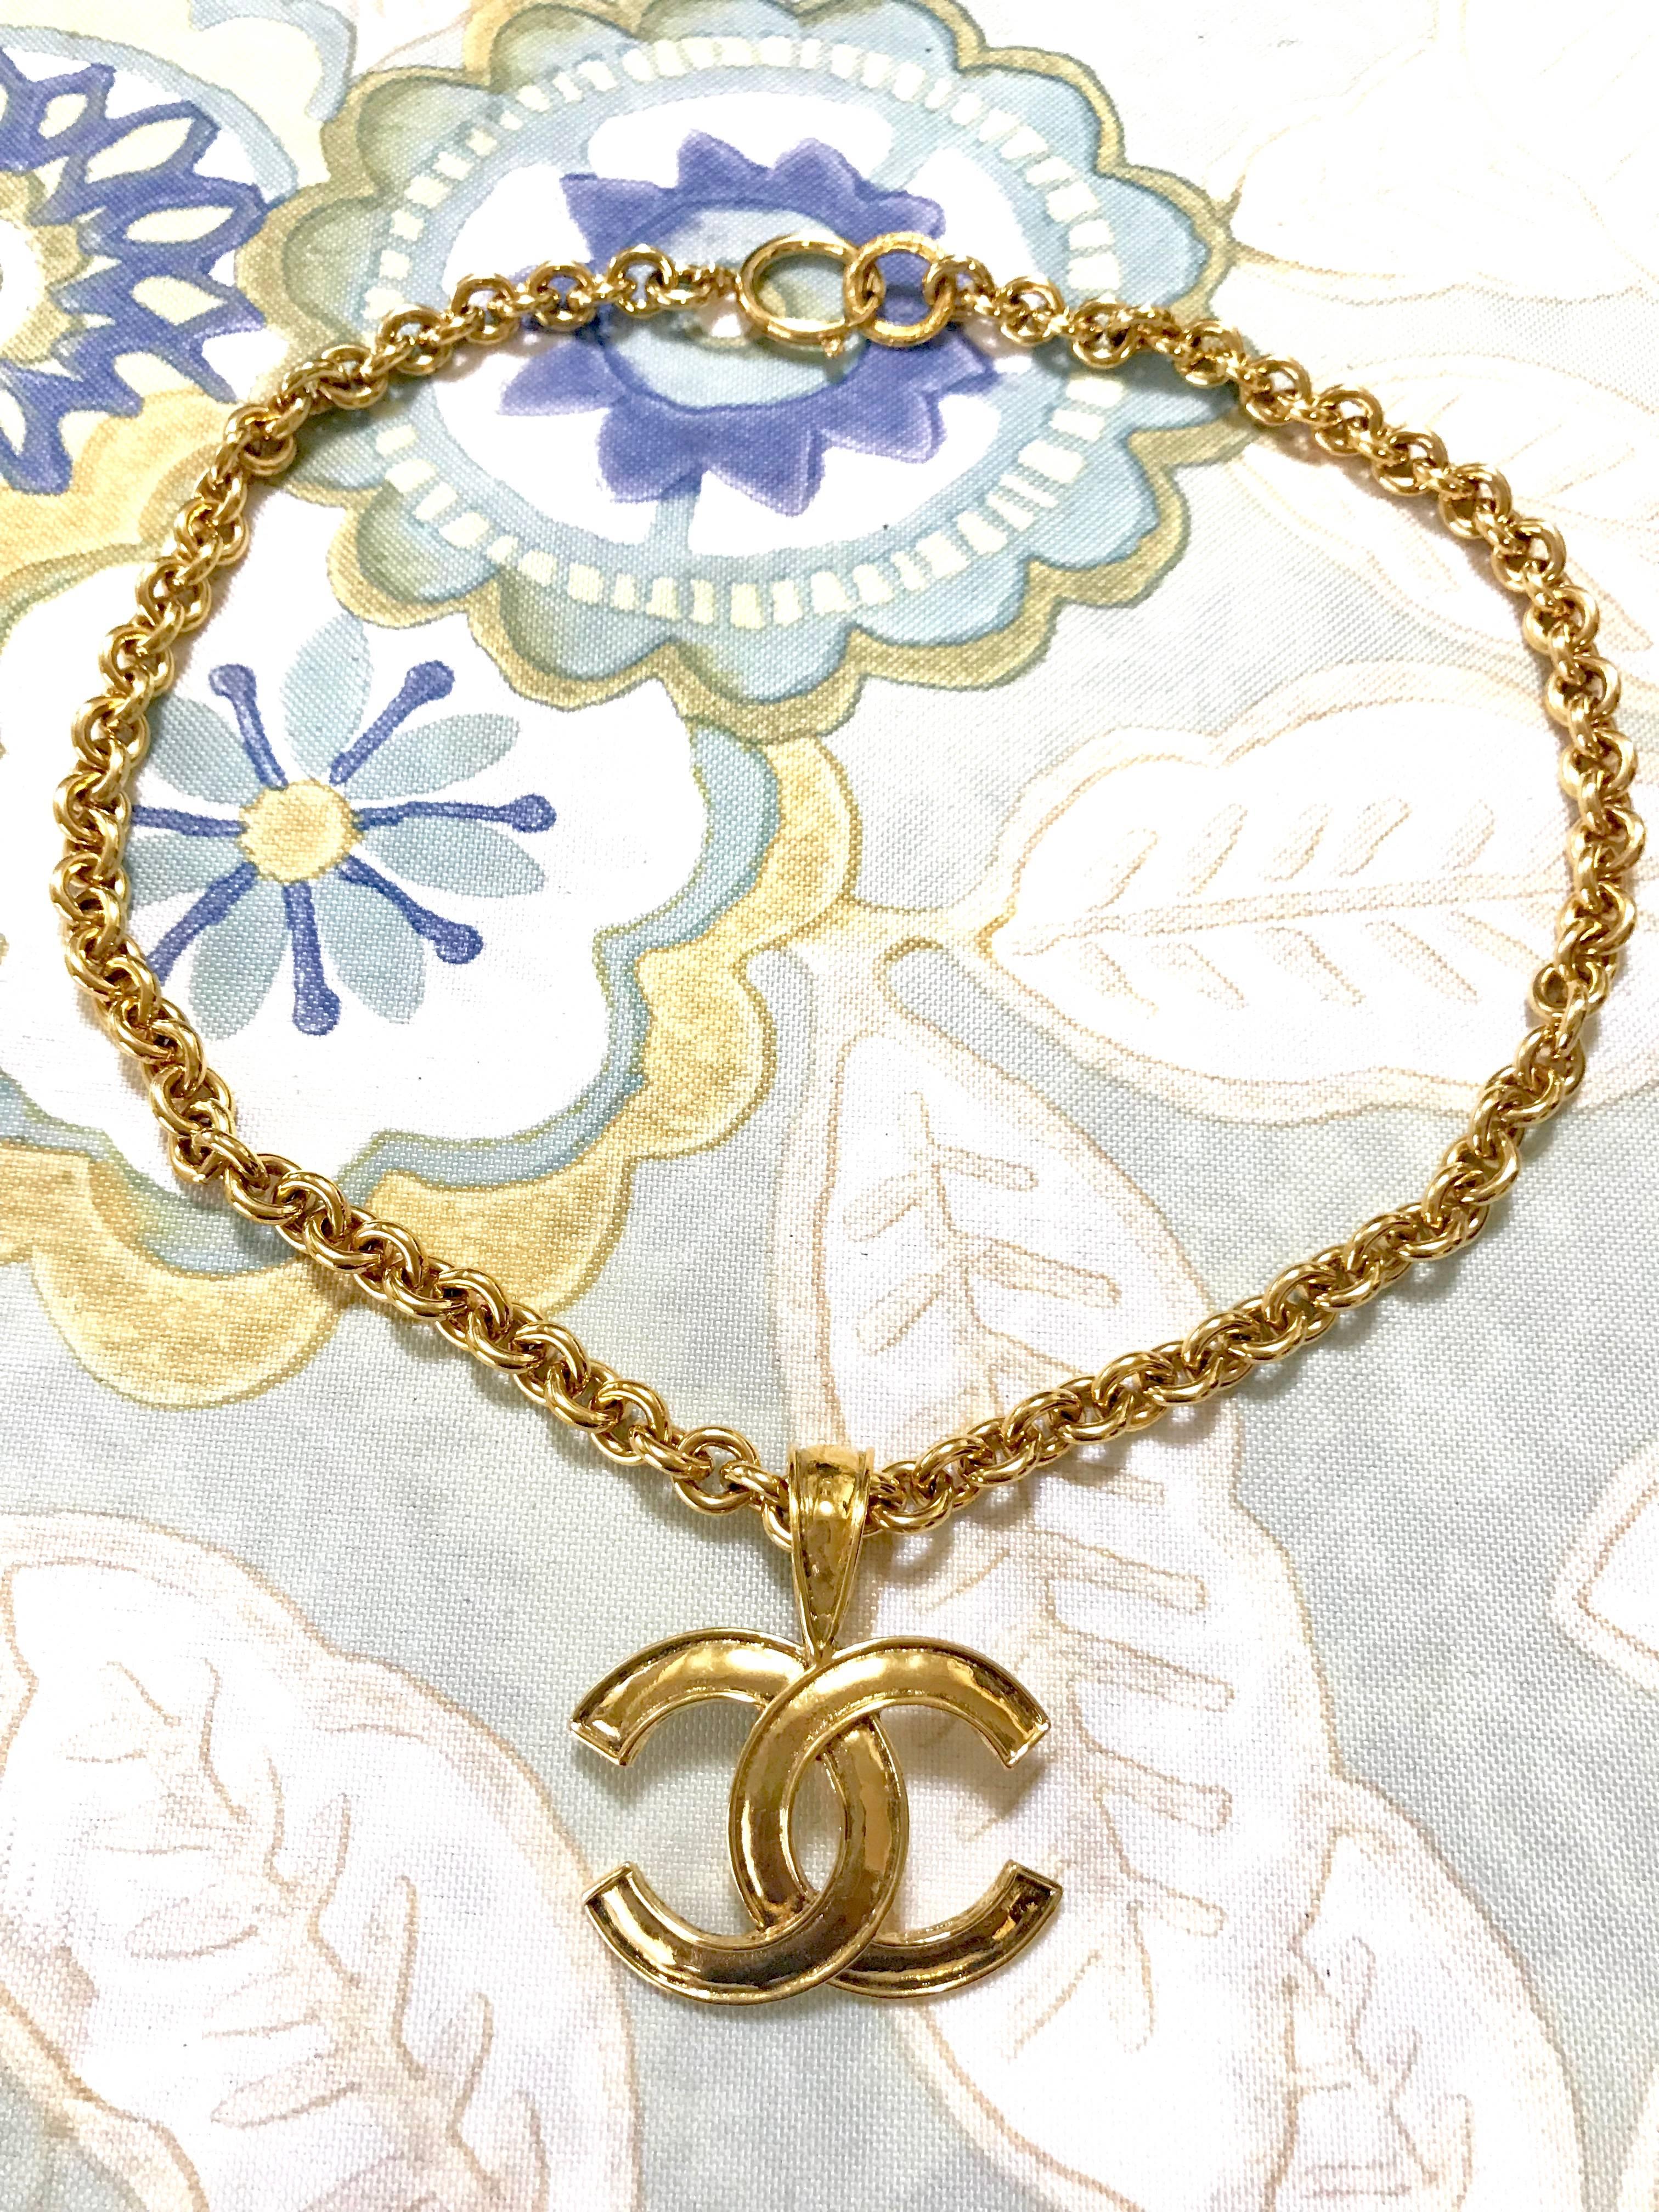 Women's MINT. Vintage CHANEL golden chain necklace with large CC mark logo pendant top. 